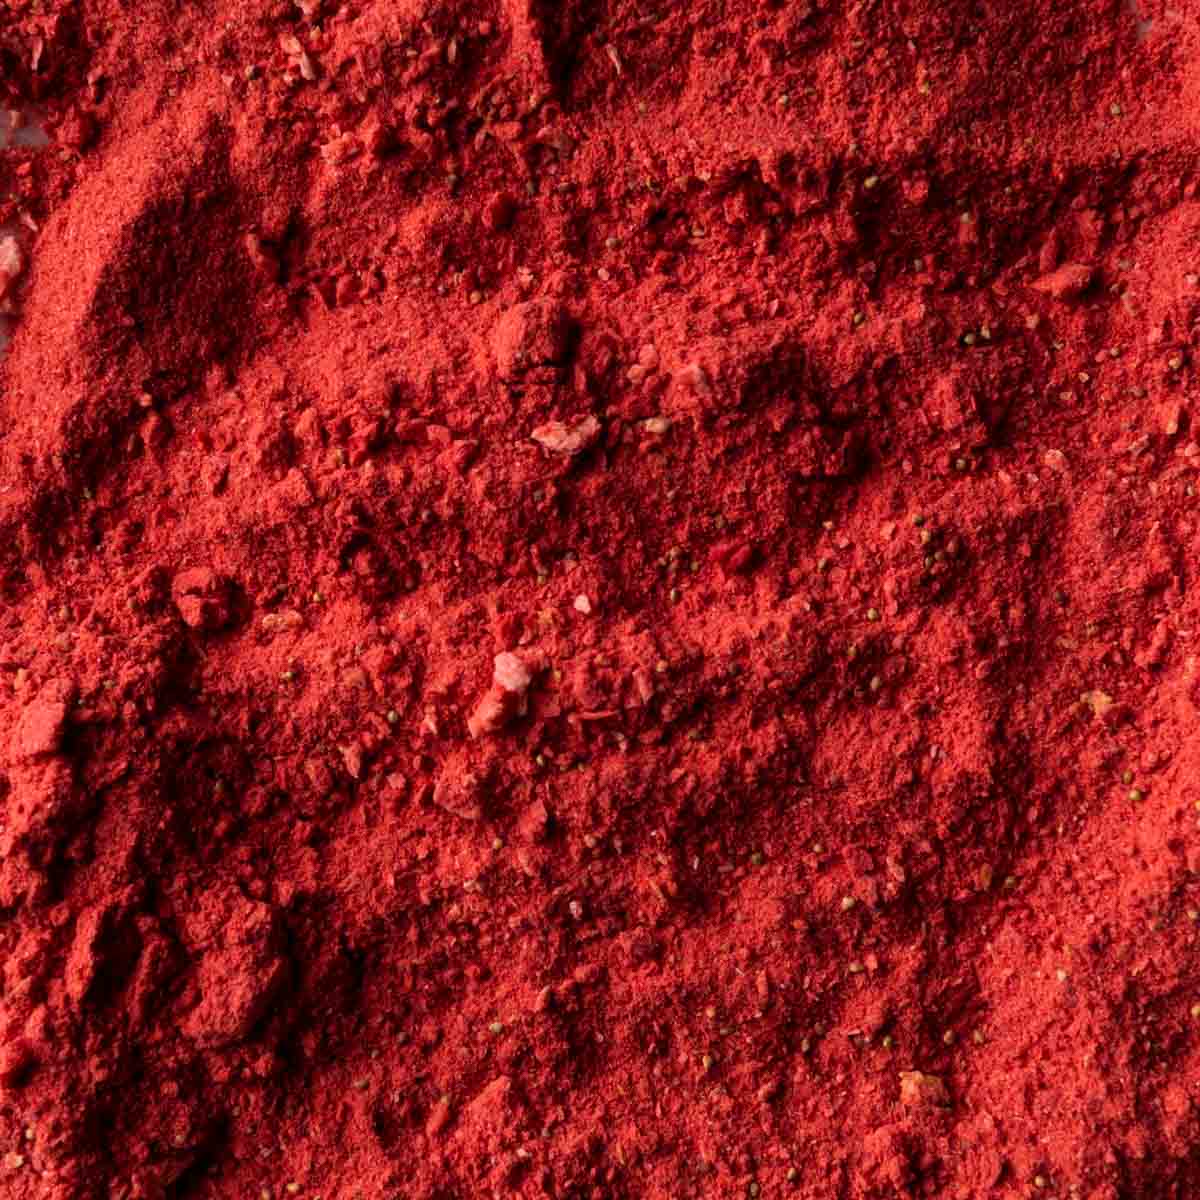 A macro shot of freeze dried strawberry powder.